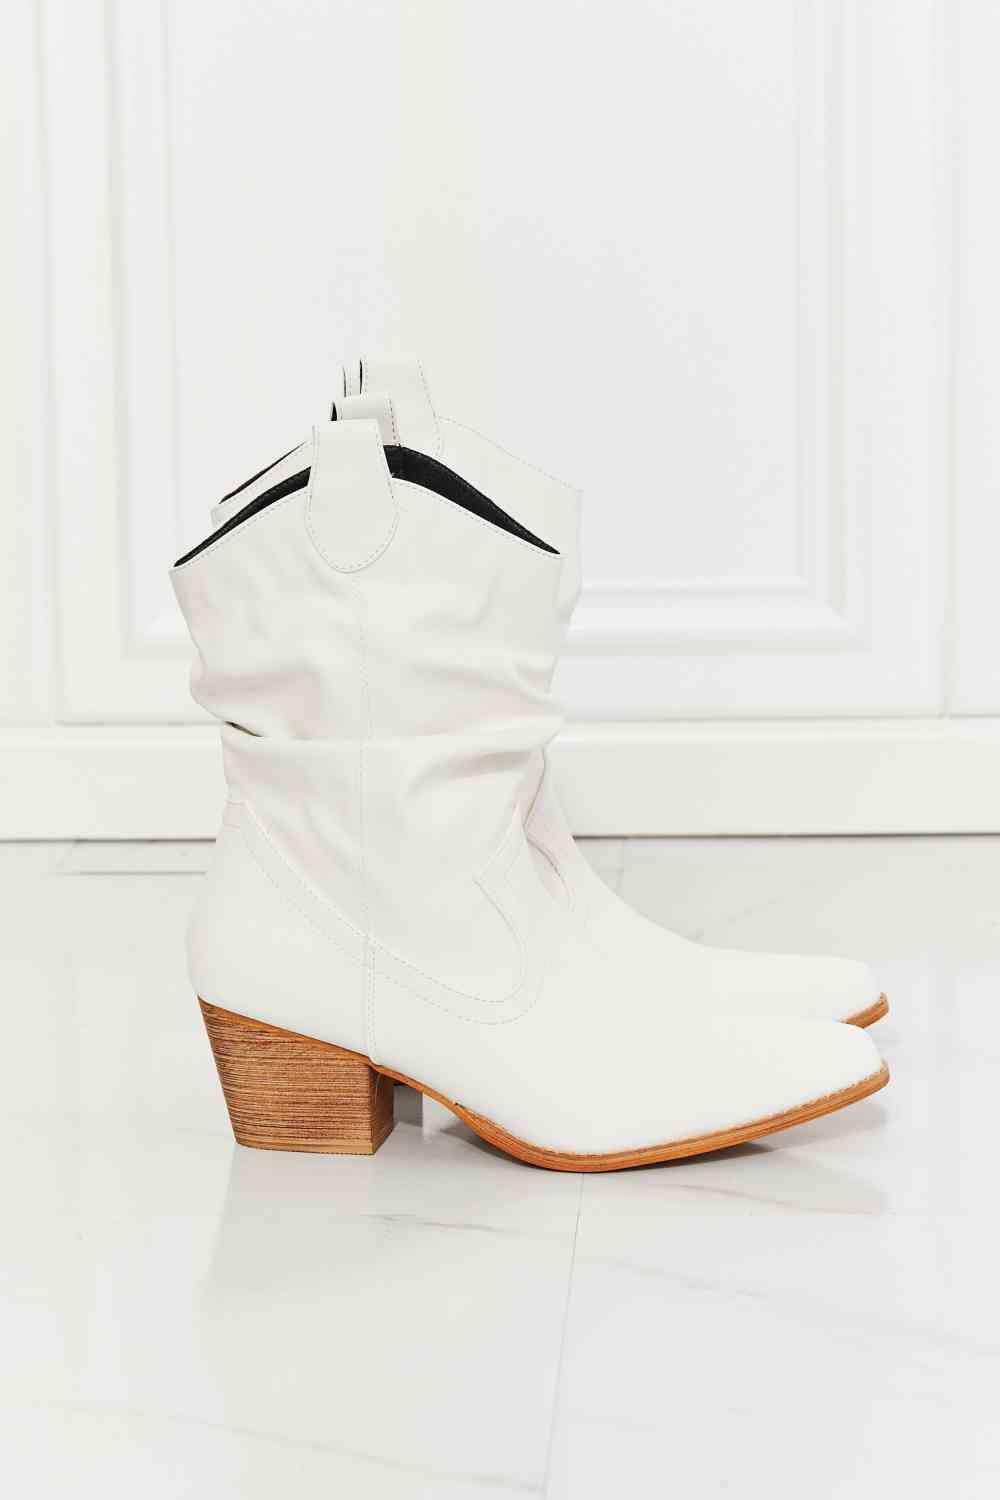 MMShoes Better in Texas Scrunch Cowboy Boots in White - Bona Fide Fashion